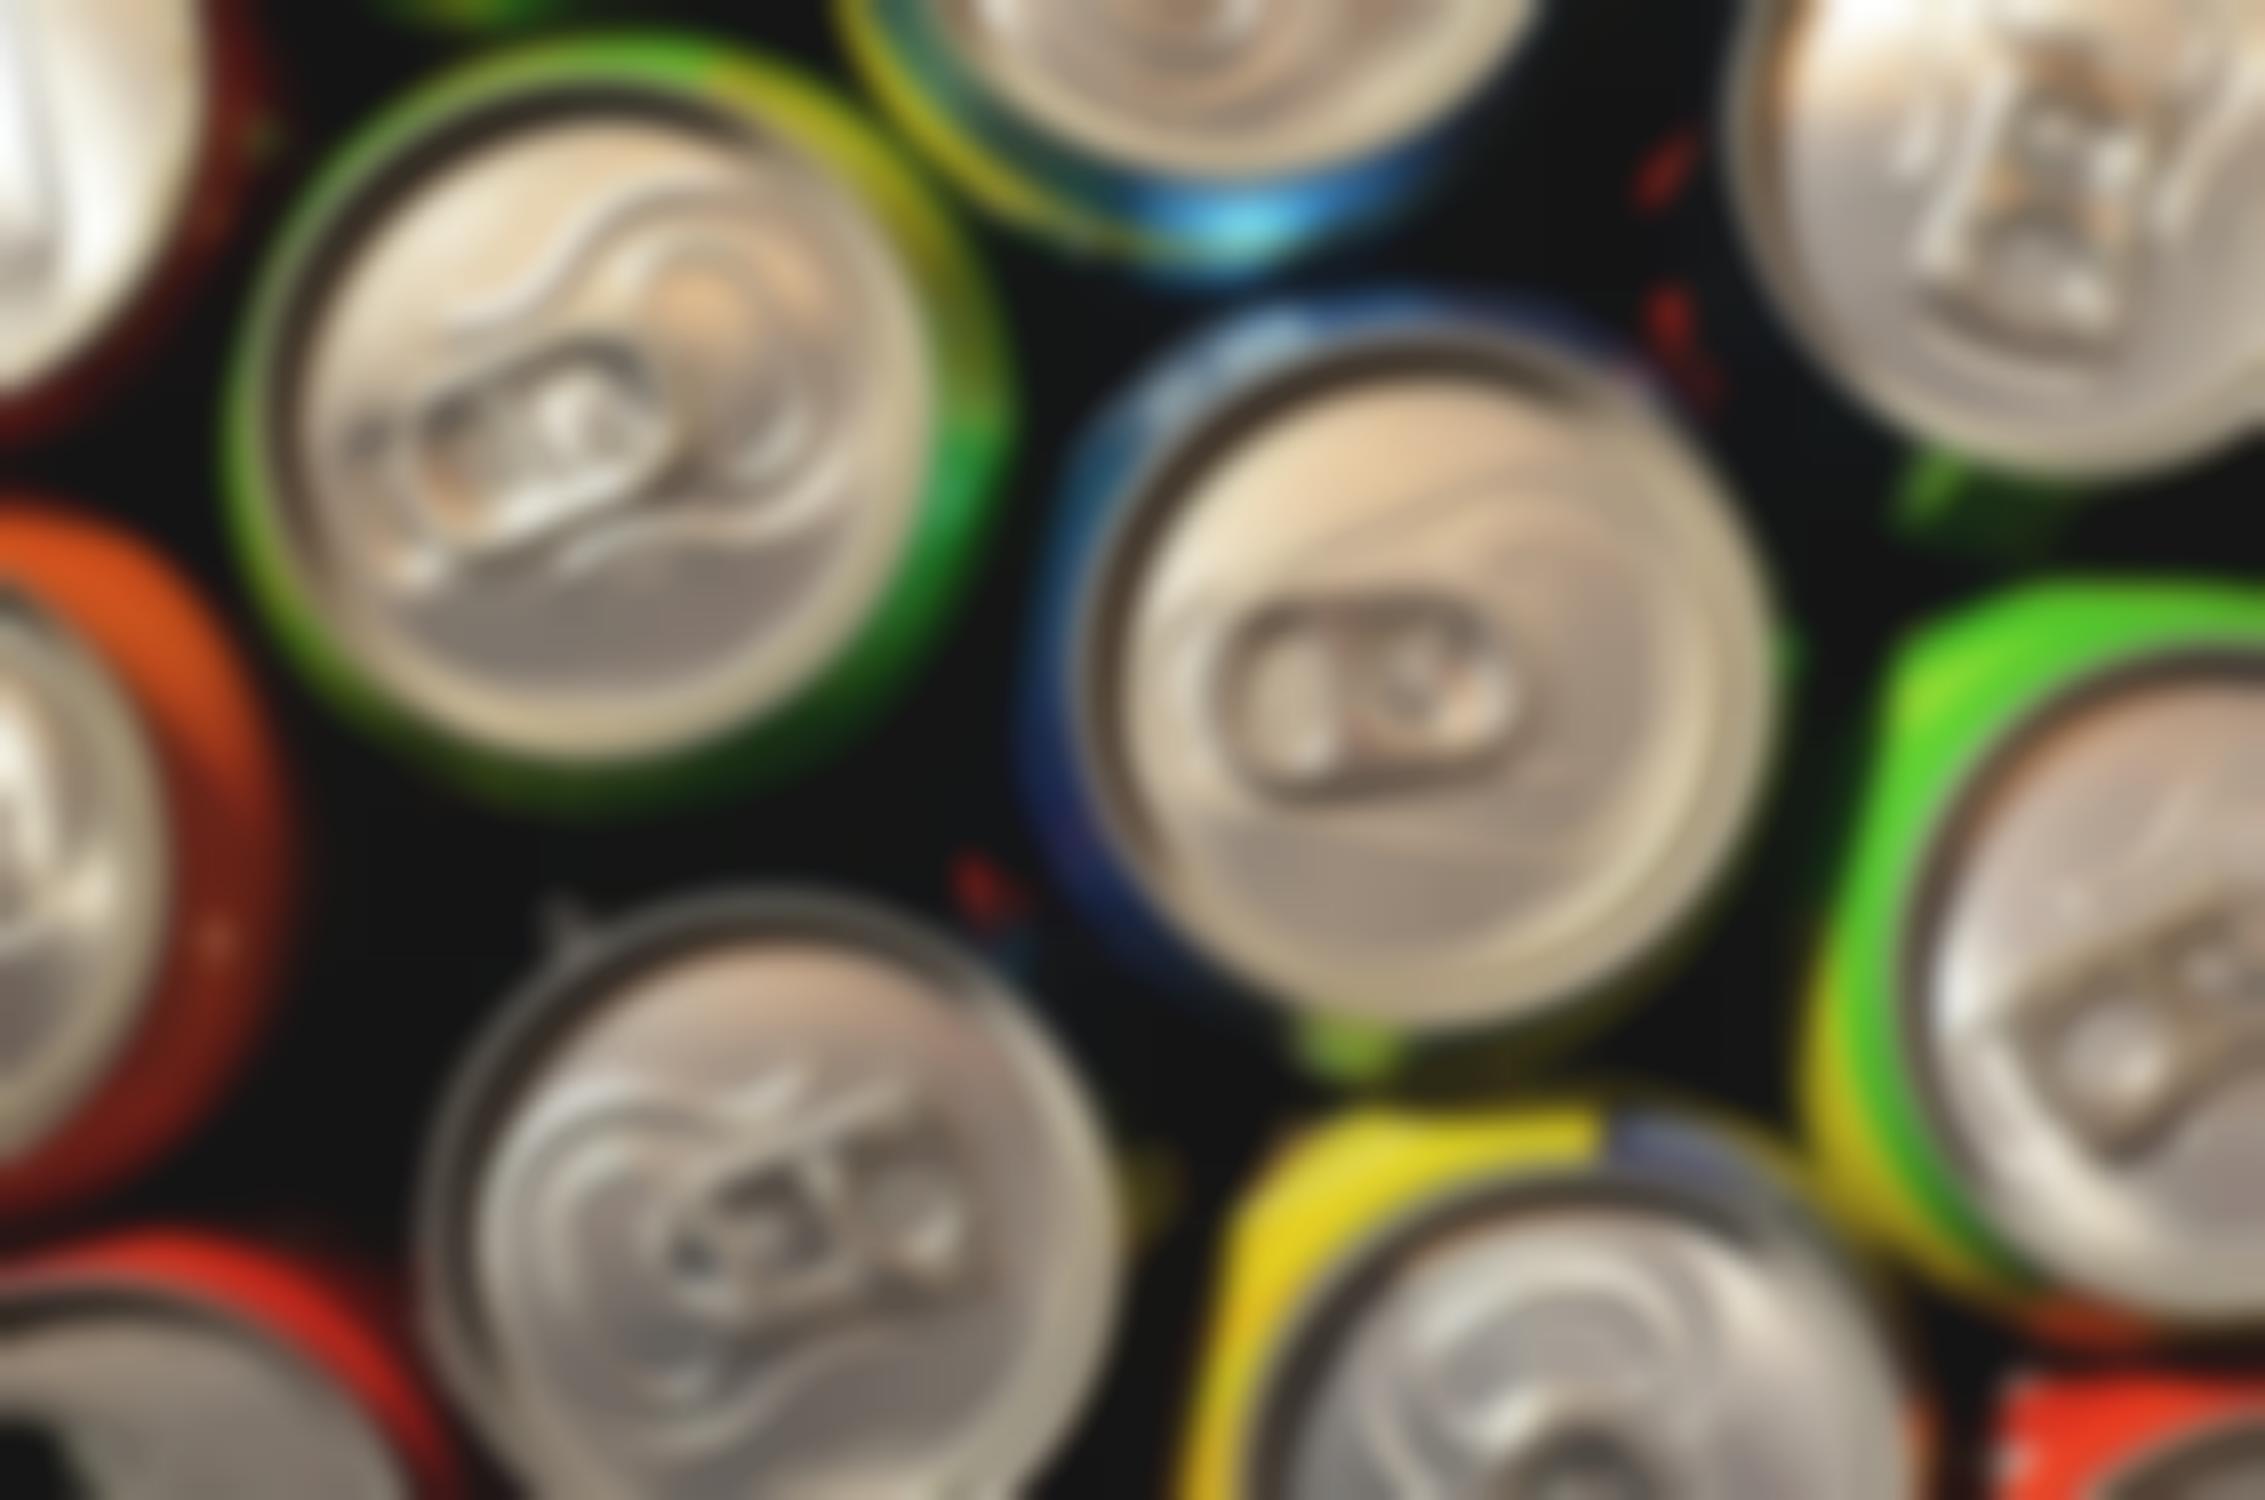 Напитки/ Breakingpic/ Pexels